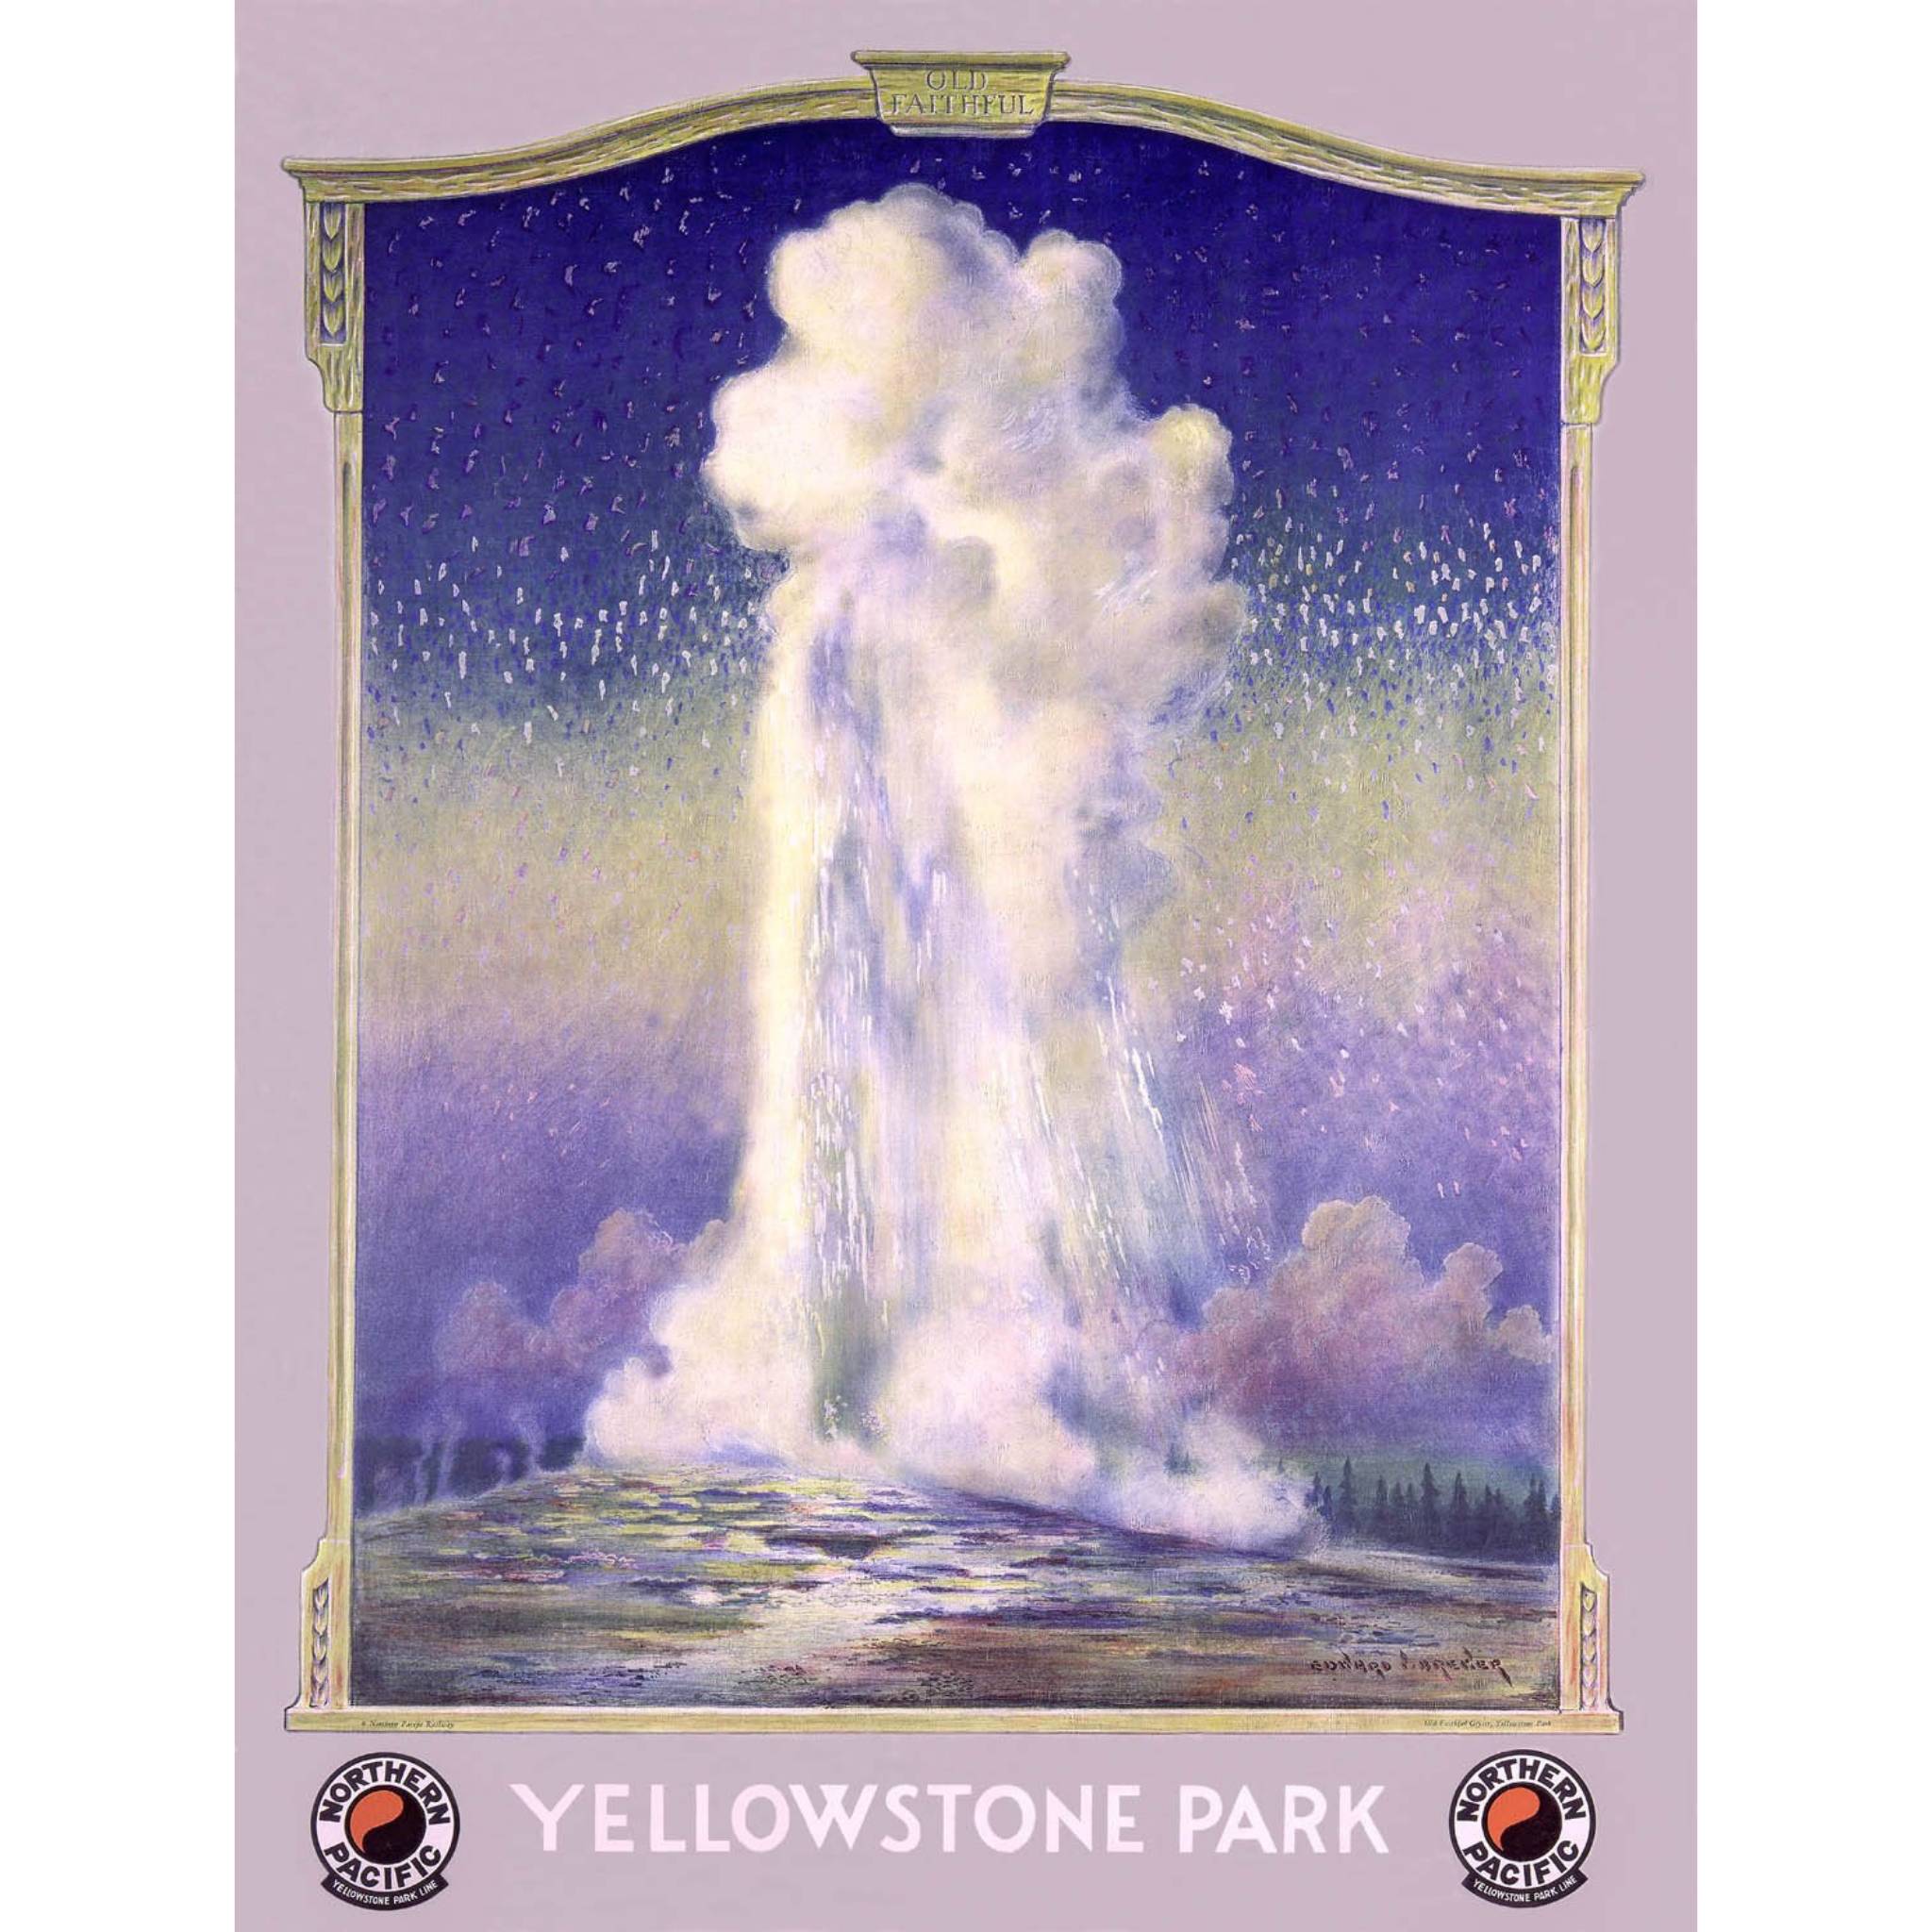 Yellowstone Park Old Faithful Geyser (NPRR) - ca. 1930 Edward Brewer Lithograph